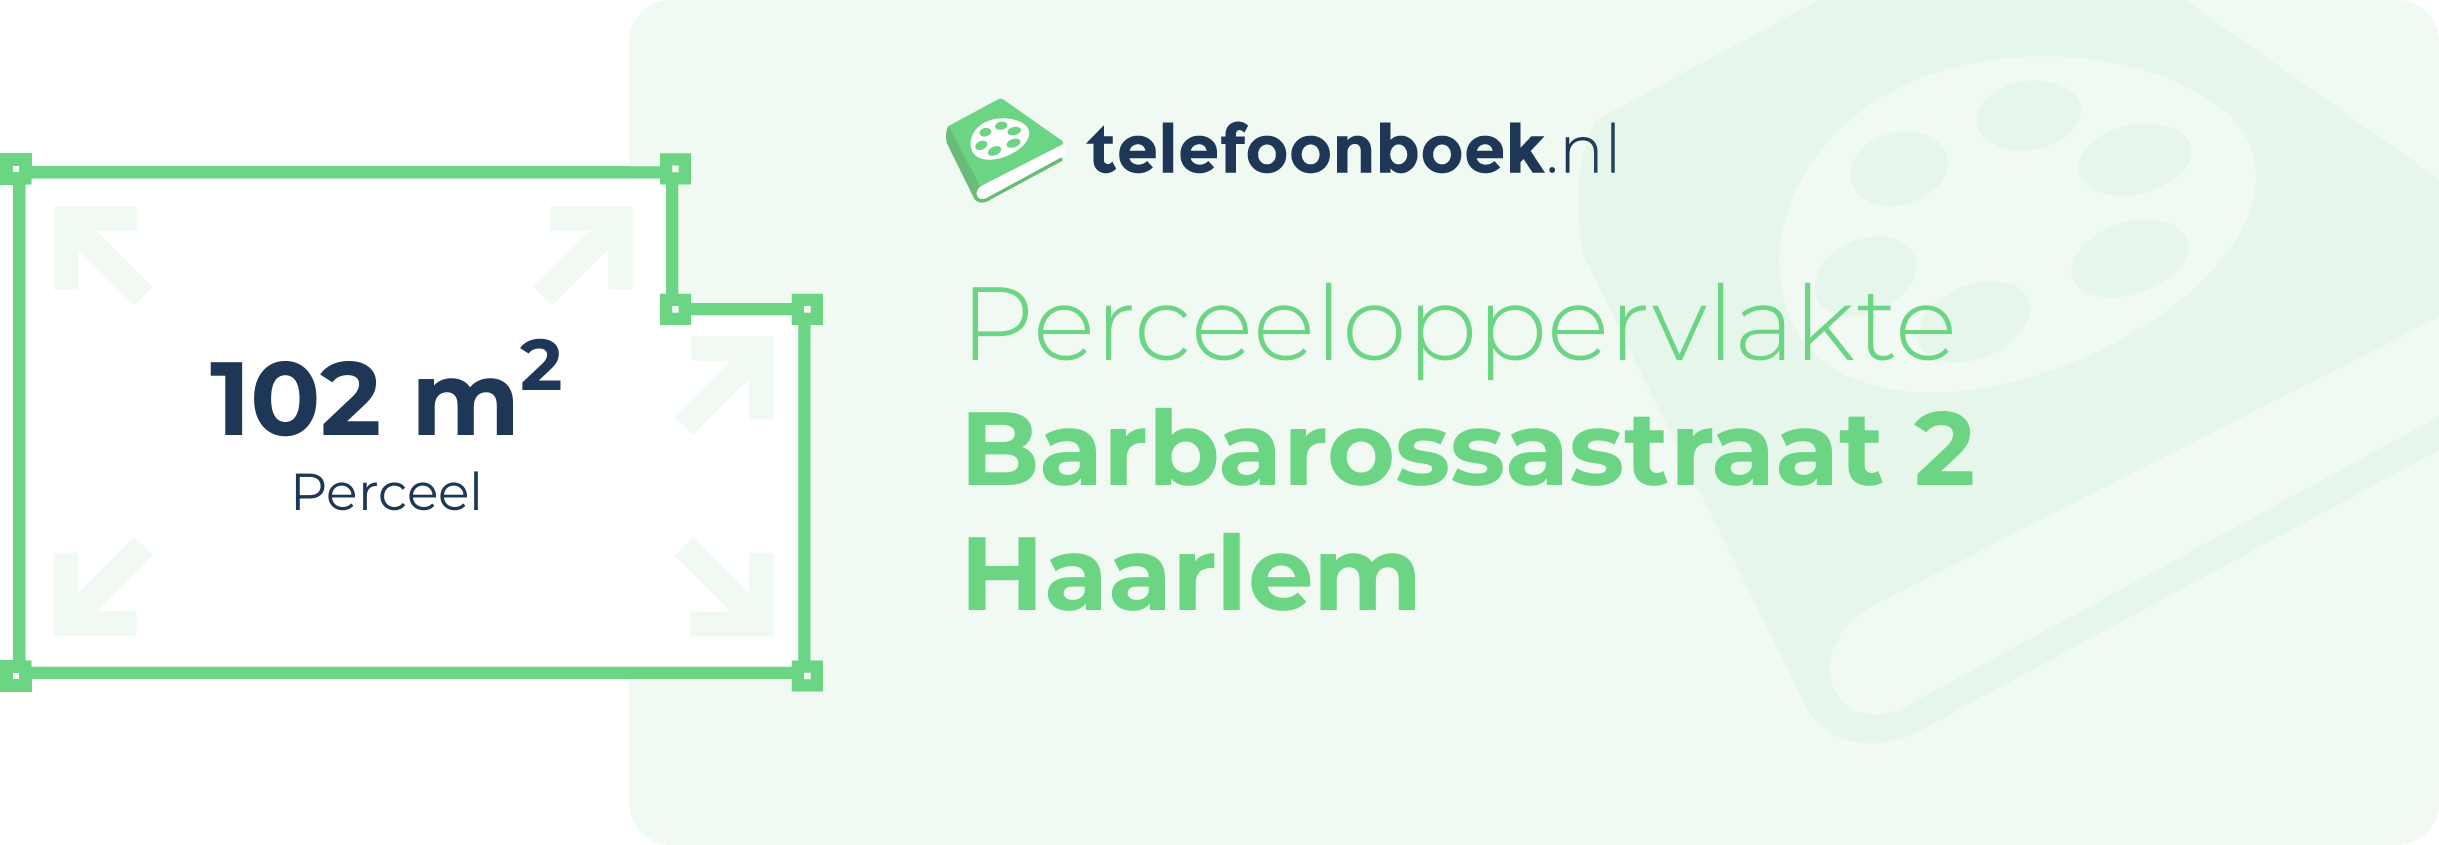 Perceeloppervlakte Barbarossastraat 2 Haarlem